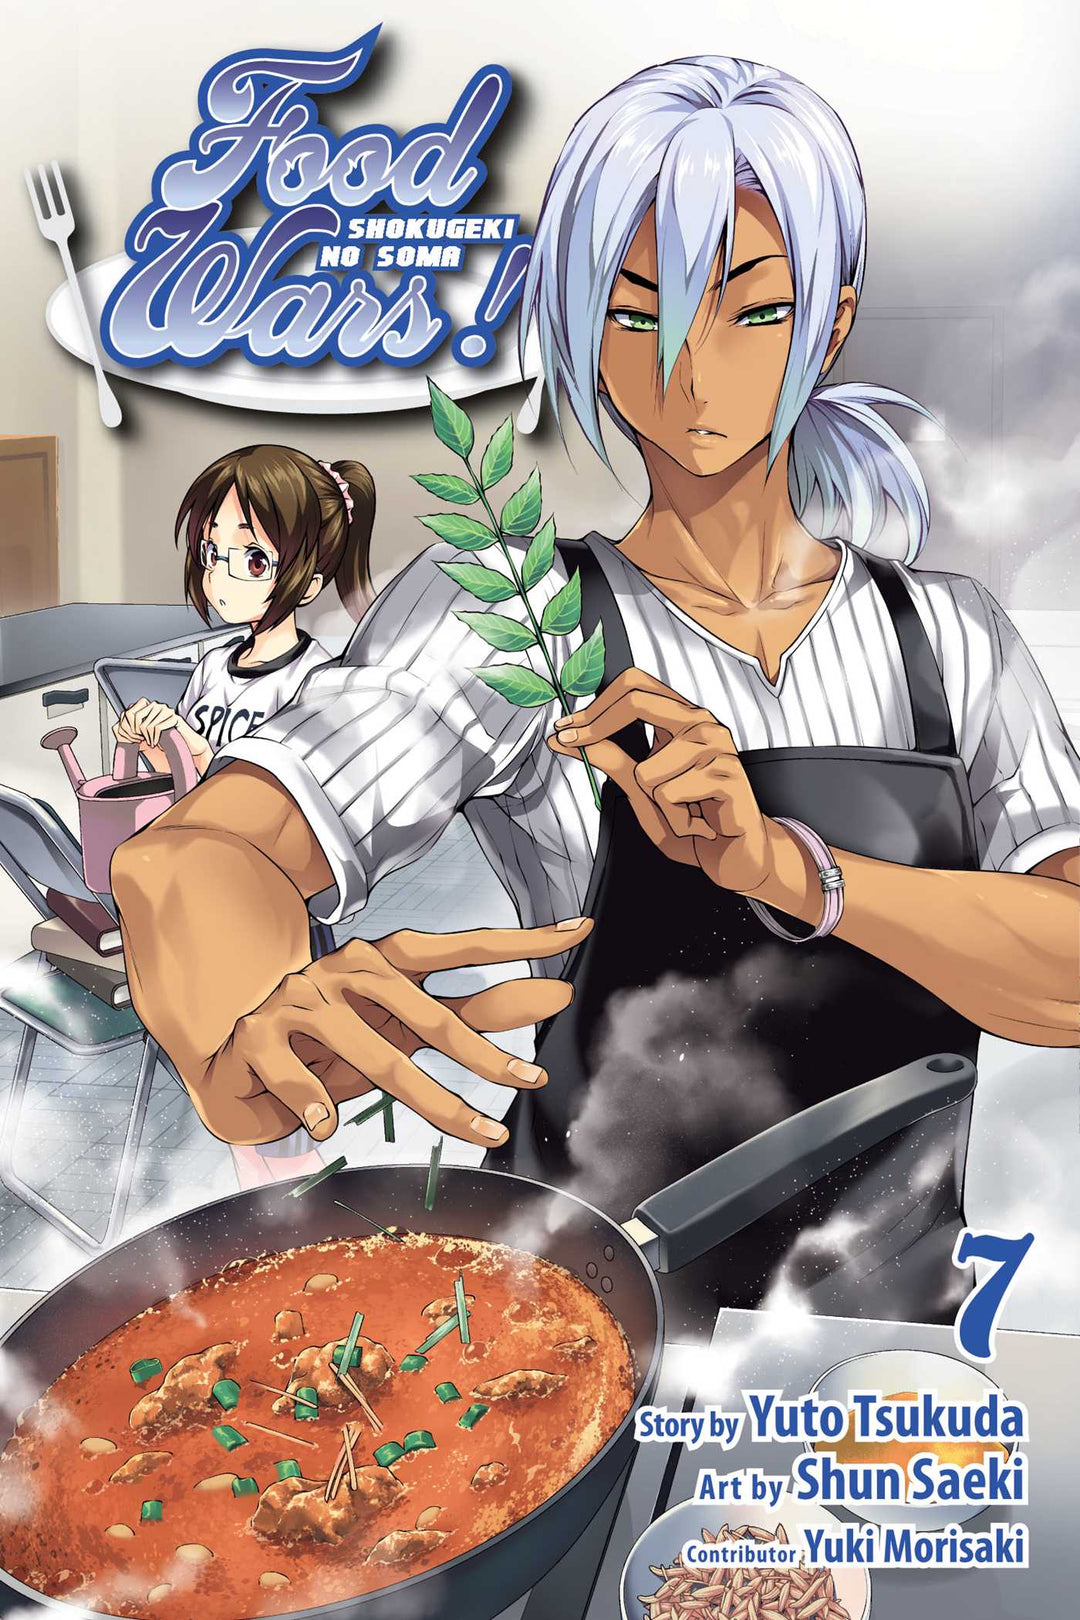 Food Wars!: Shokugeki no Soma, Vol. 07 - Manga Mate